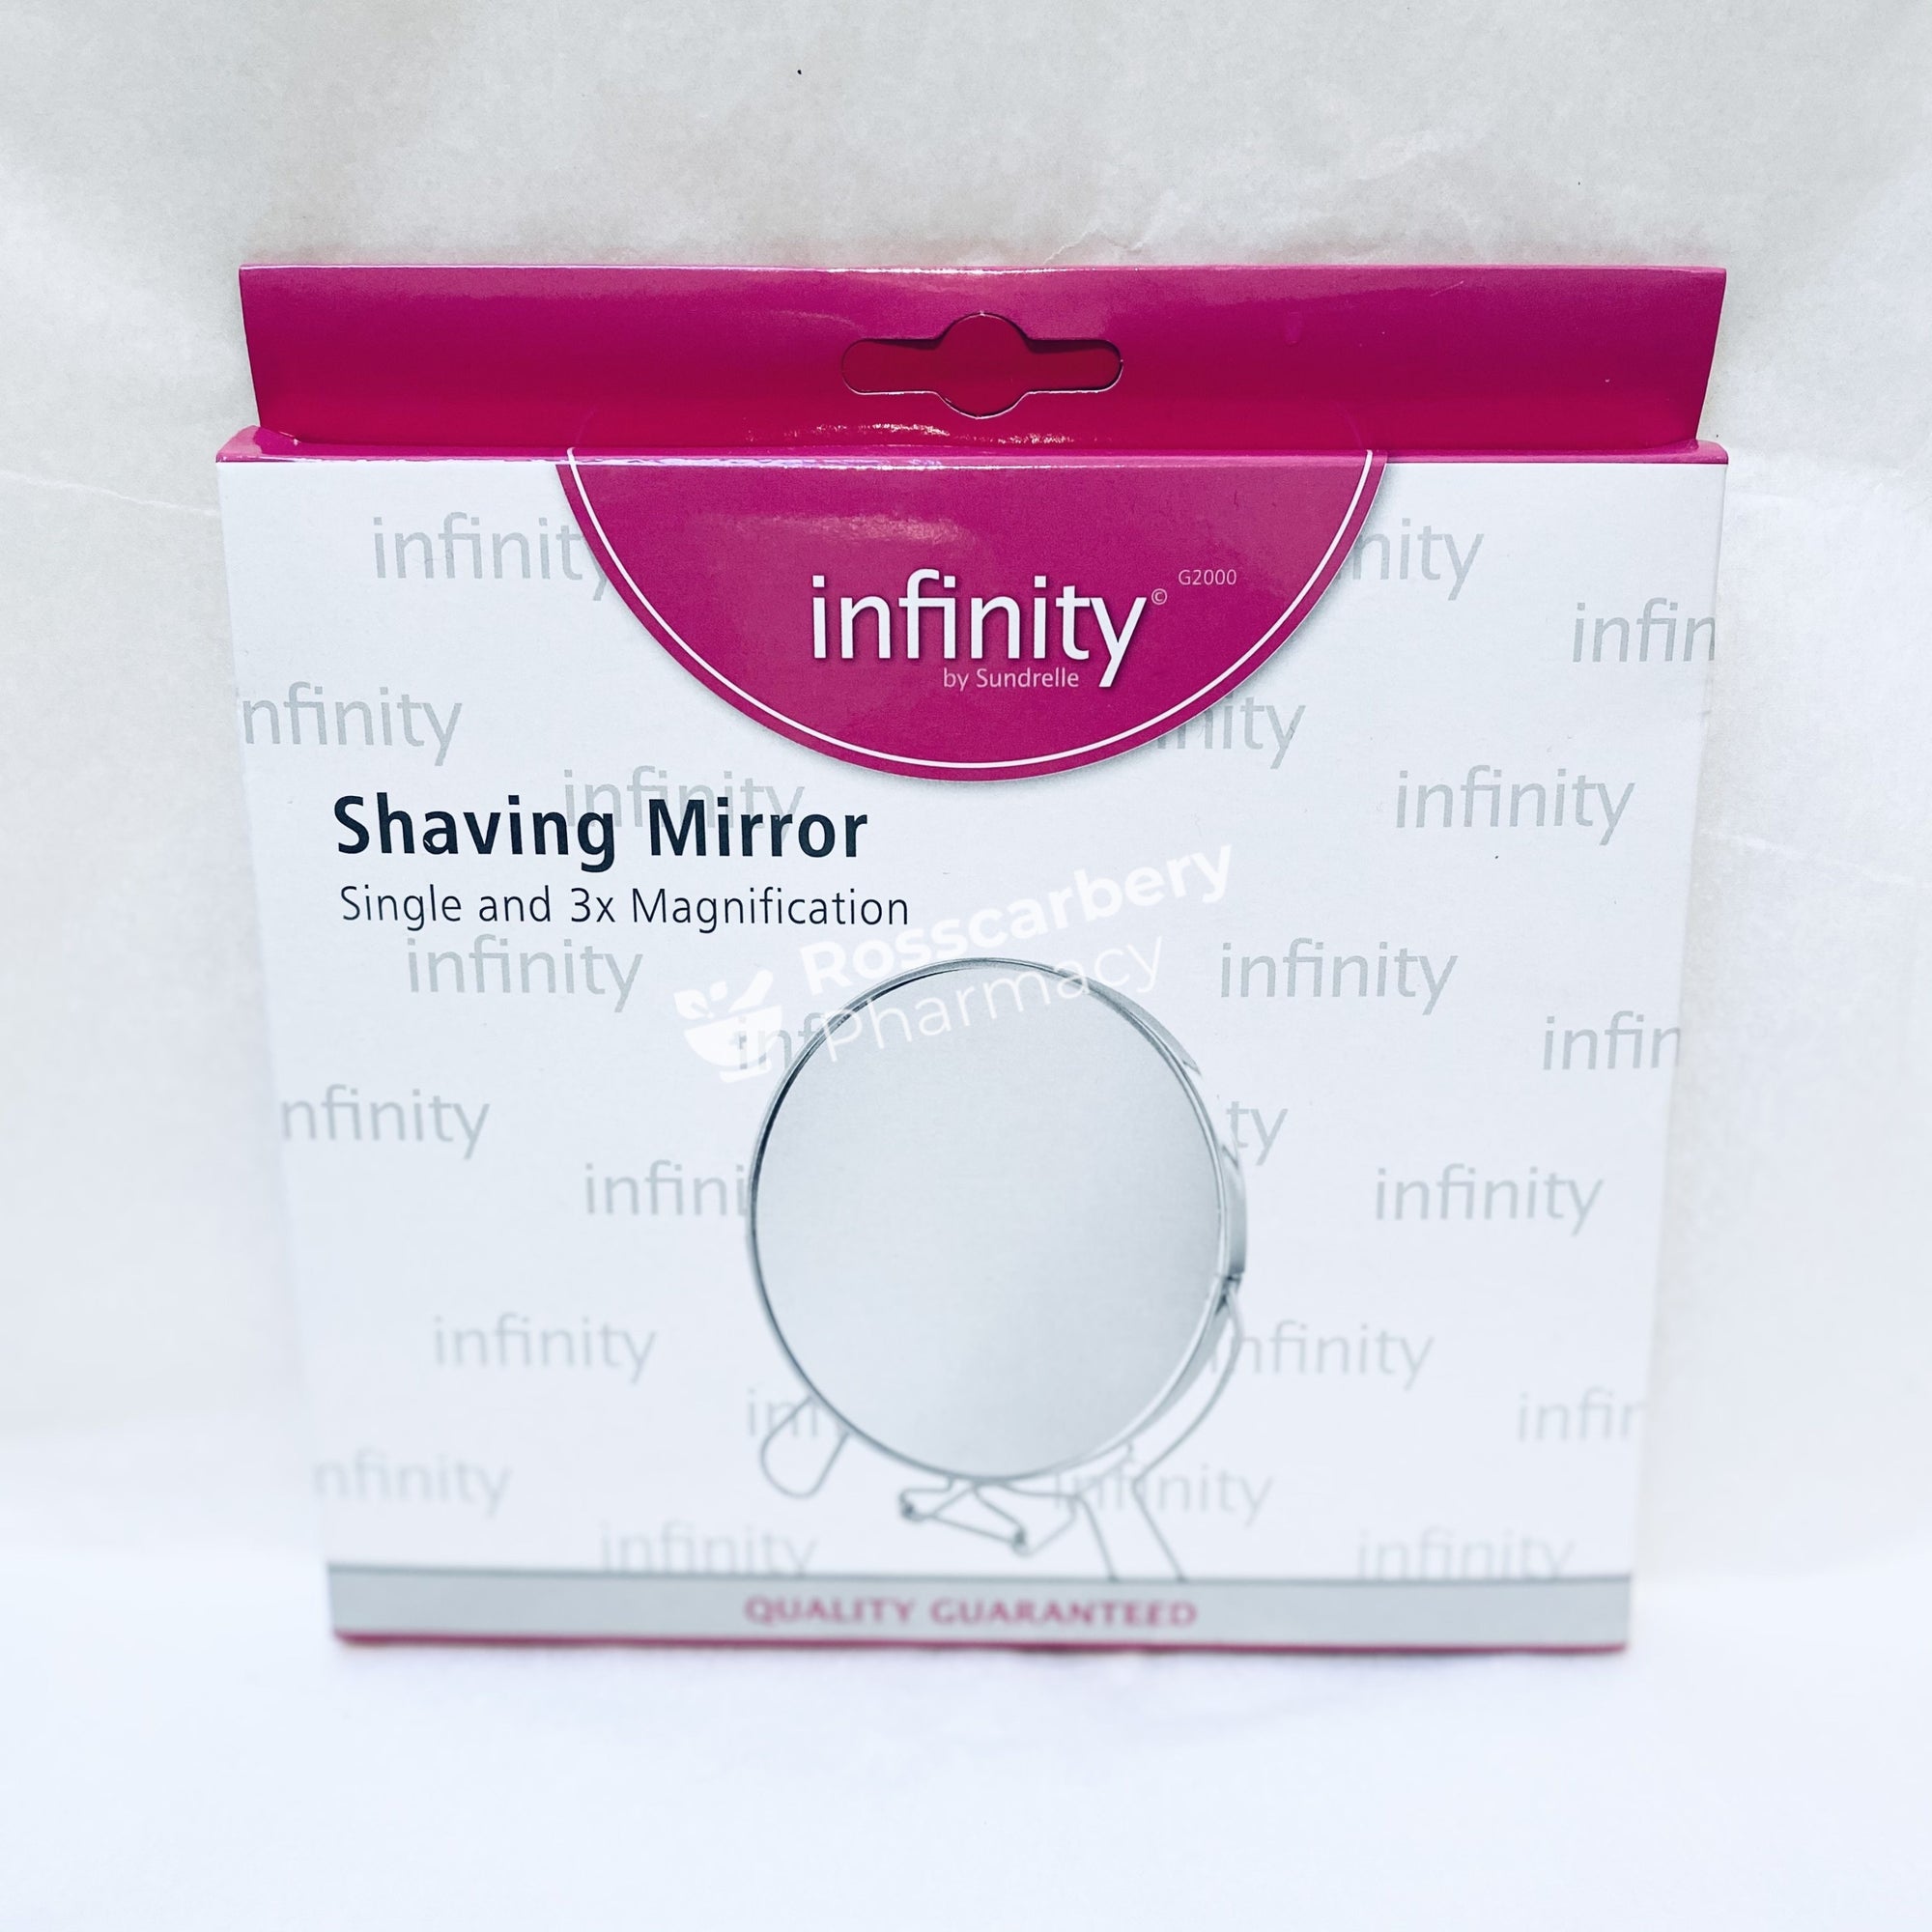 Infinity By Sundrelle Shaving Mirror